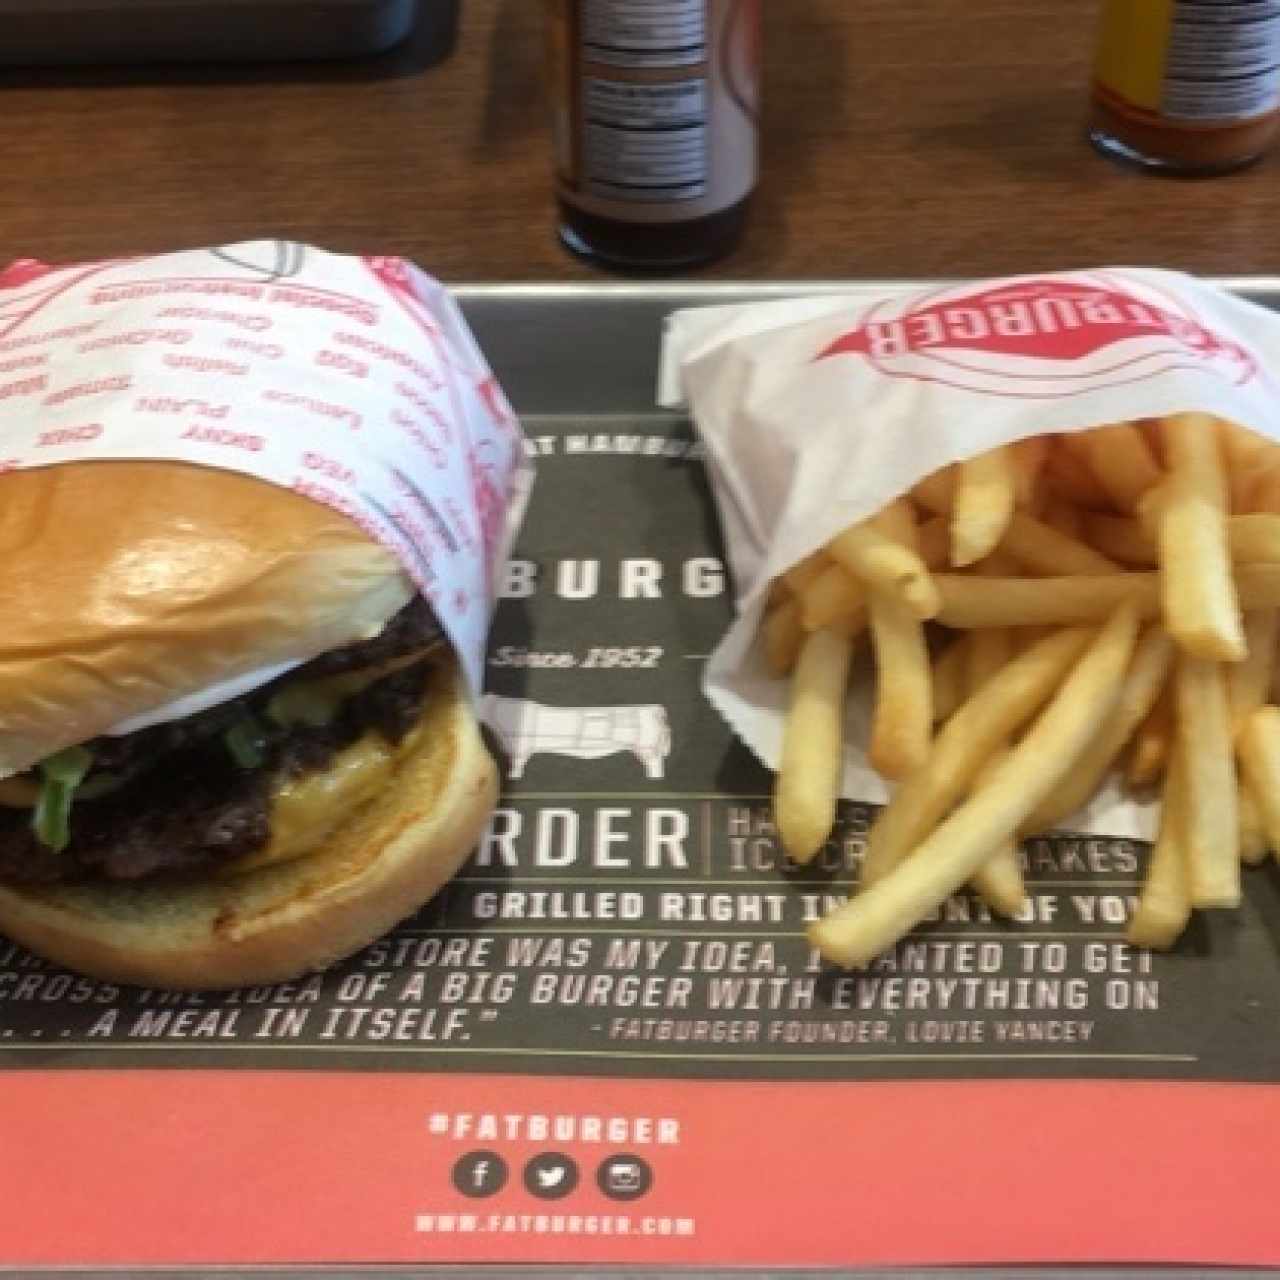 The Fatburger - Doble